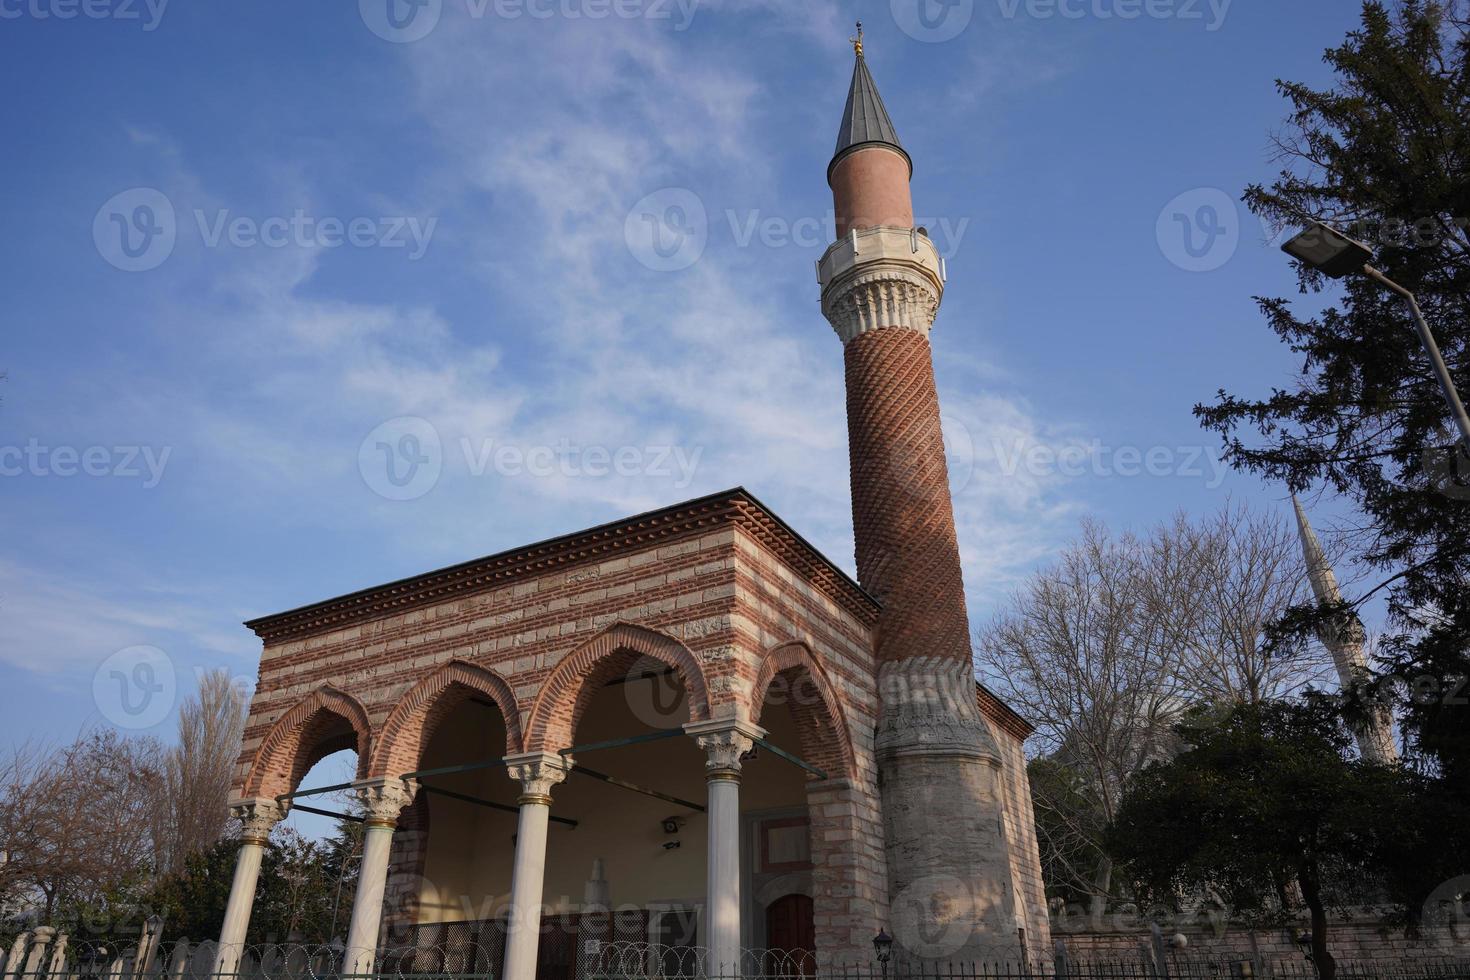 Burmali Mescid Mosque in Istanbul, Turkiye photo